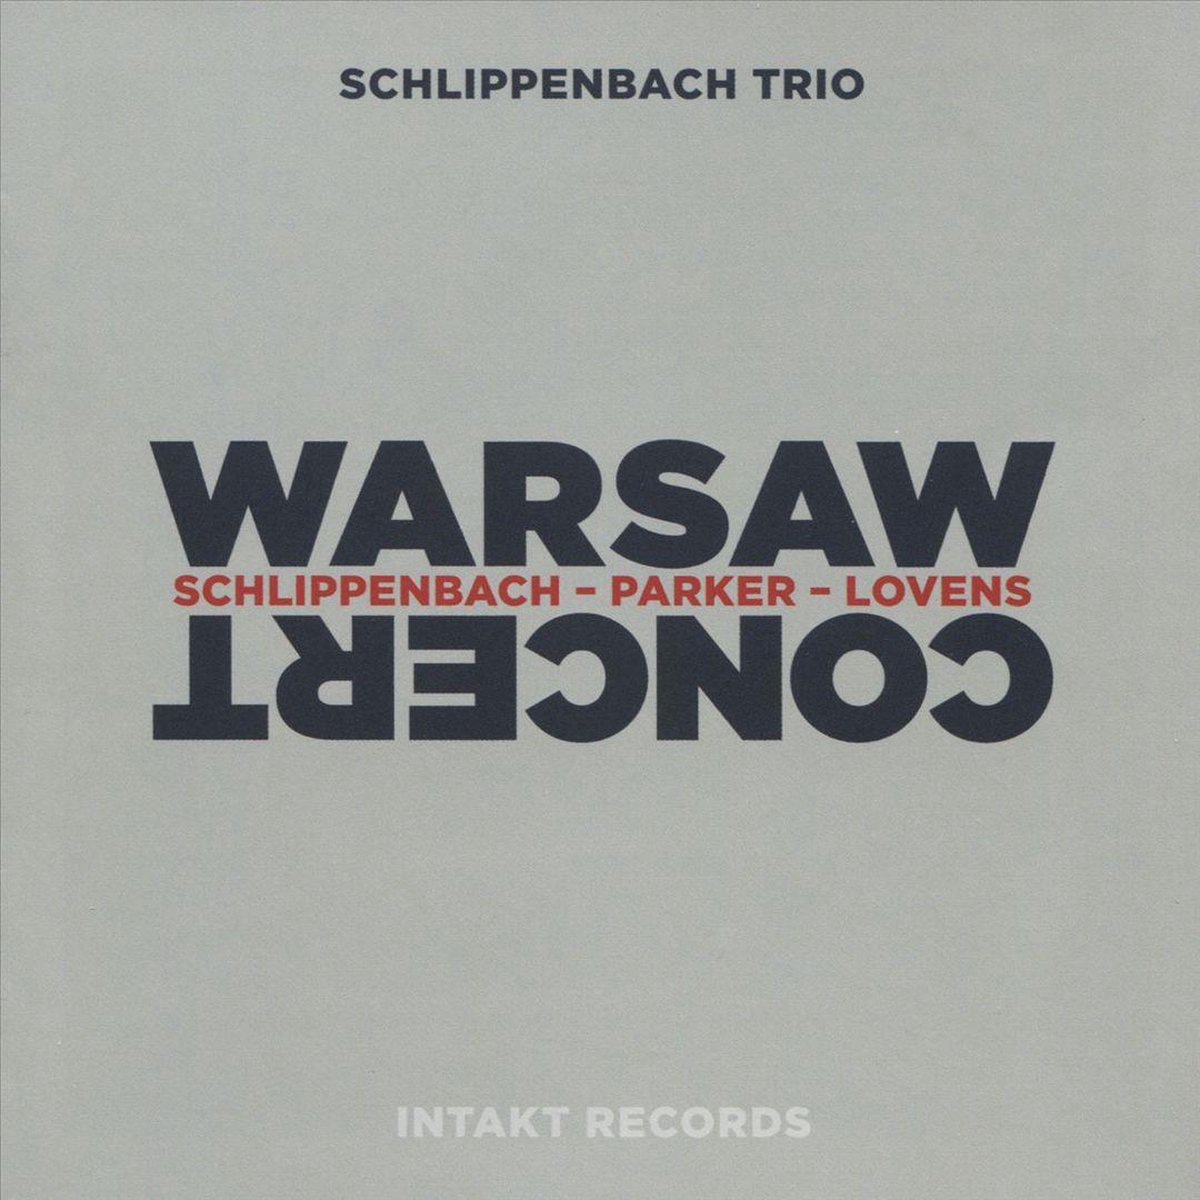 Schlippenbach Trio: Warsaw Concert